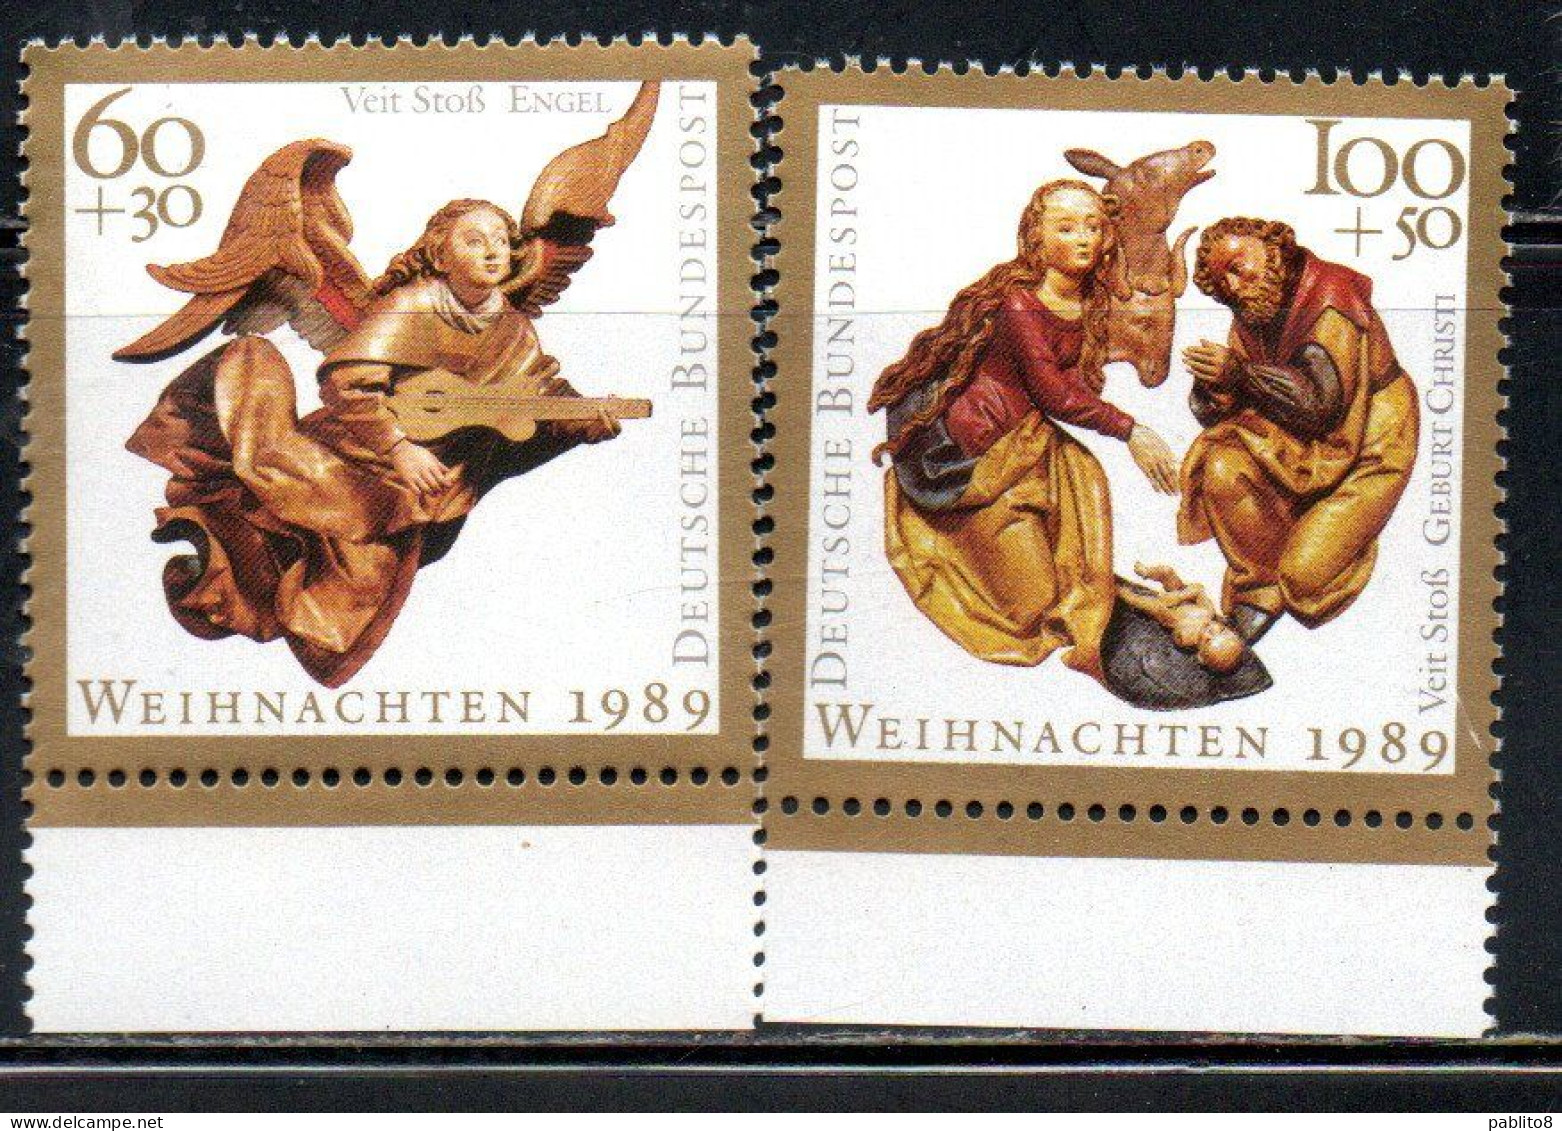 GERMANY GERMANIA ALLEMAGNE 1989 CHRISTMAS WEIHNACHTEN NATALE NOEL NAVIDAD COMPLETE SET SERIE COMPLETA MNH - Neufs